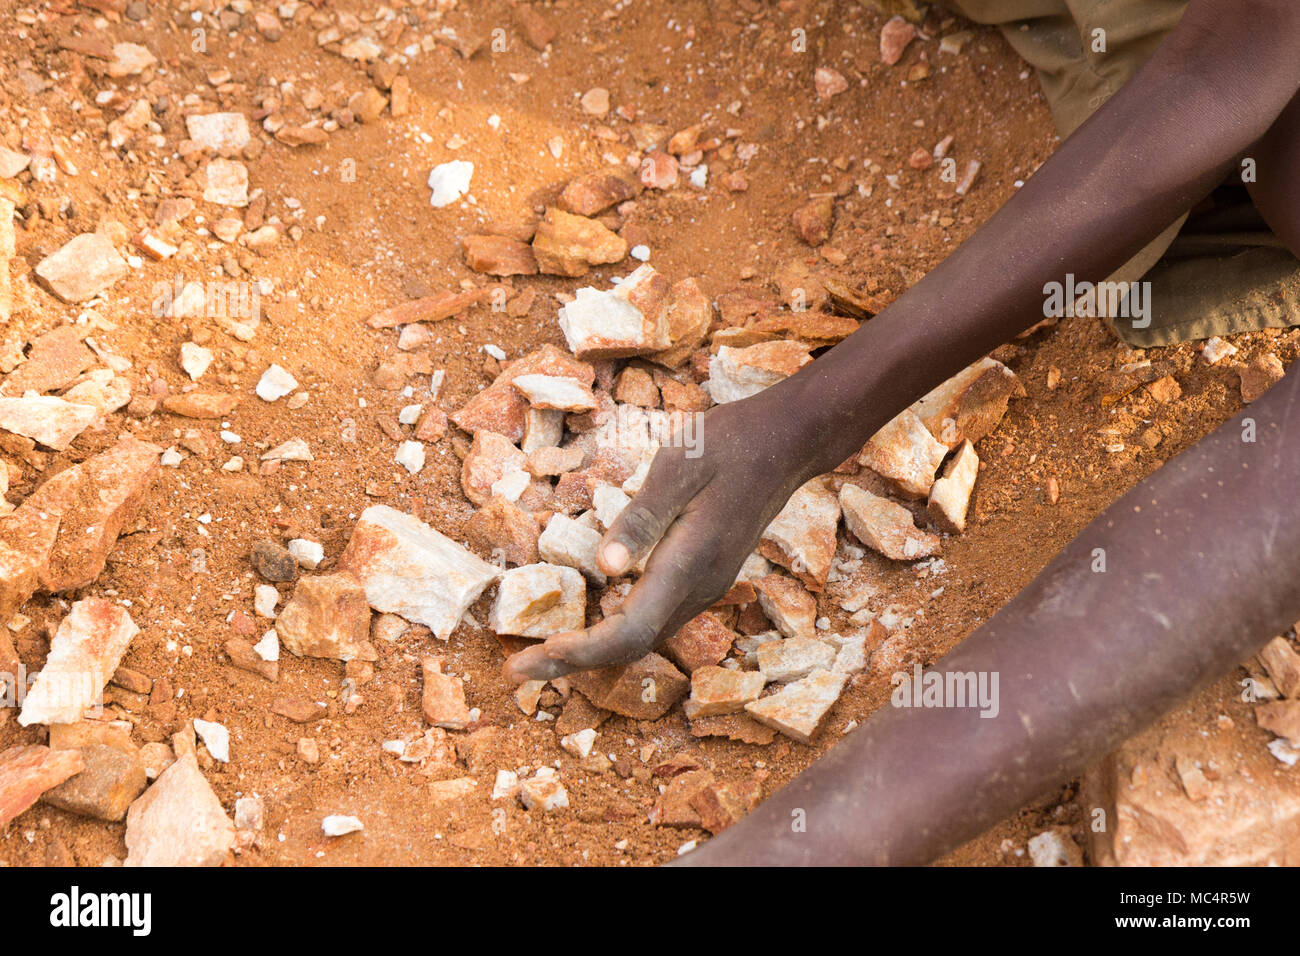 Ugandan child's hands breaking rocks into small slabs for his or her foreman. Shot in Uganda in June 2017. Stock Photo